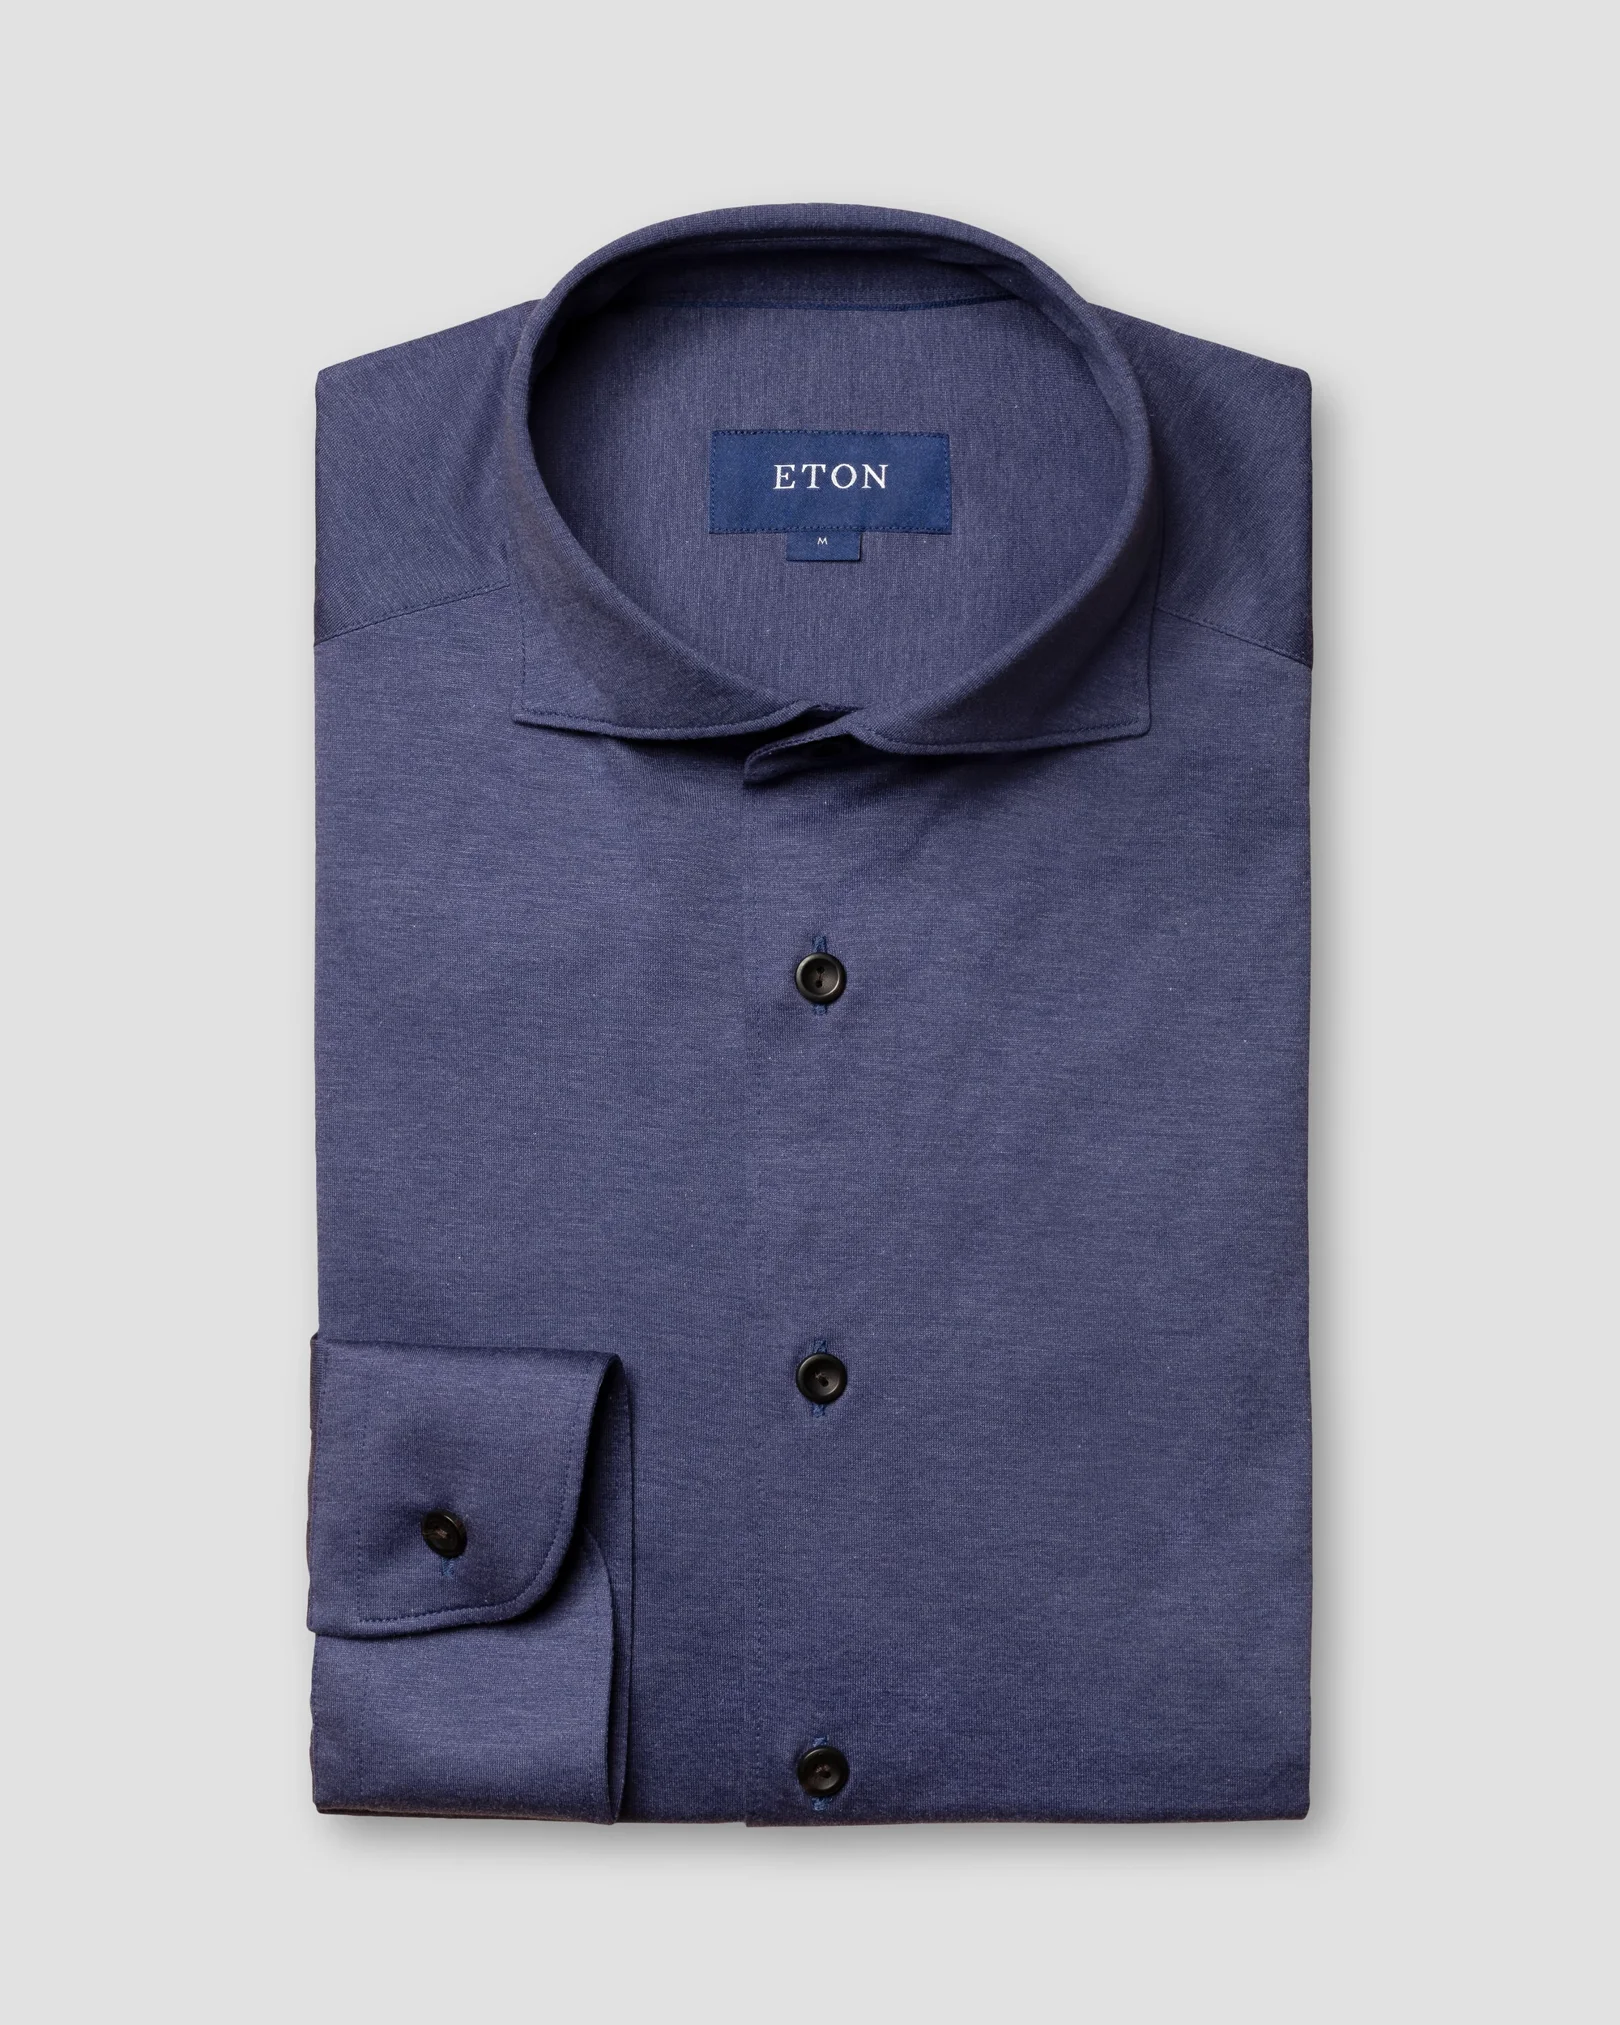 Eton - mid blue jersey shirt wide spread jersey single rounded slim jersey